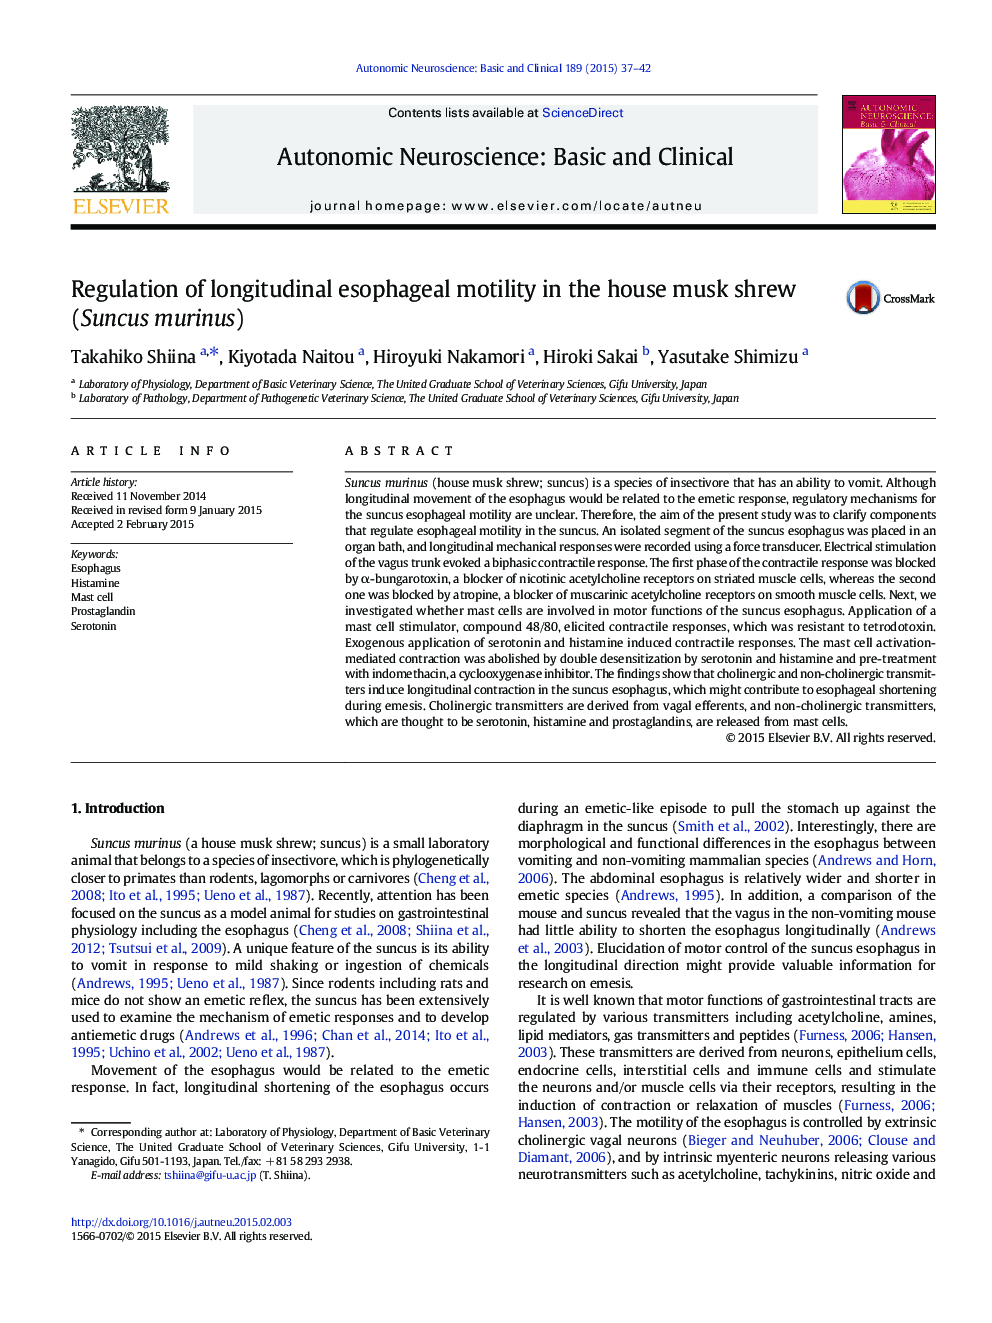 Regulation of longitudinal esophageal motility in the house musk shrew (Suncus murinus)